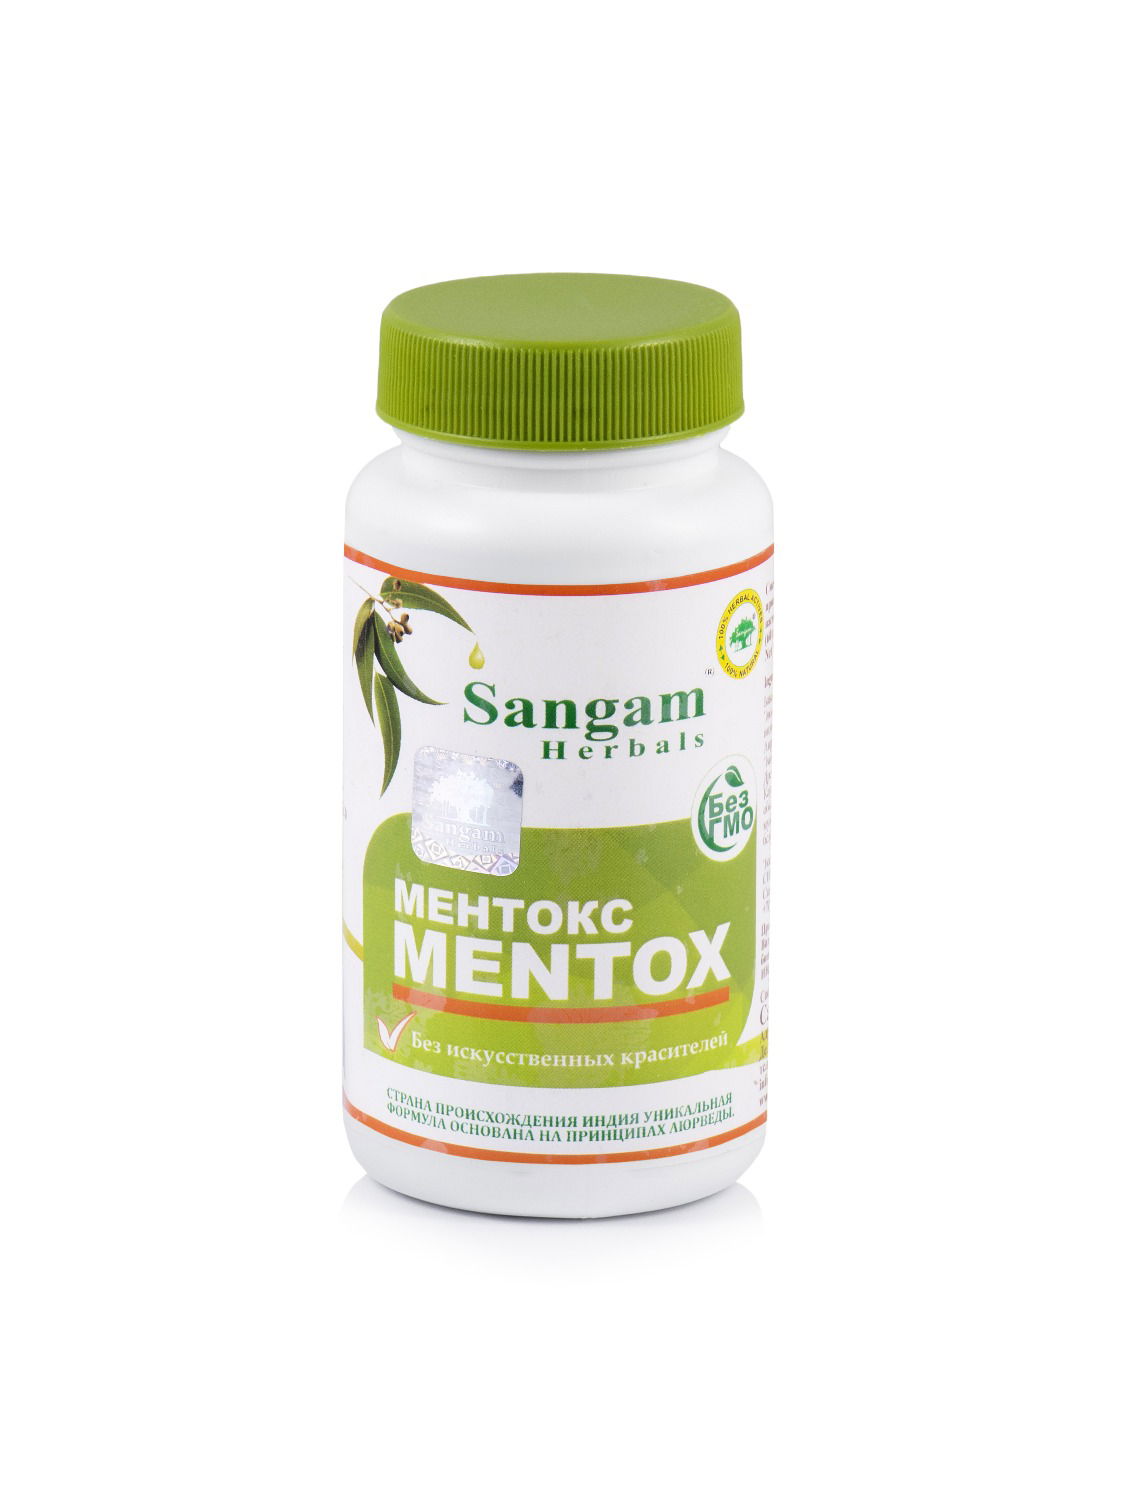 Ментокс Sangam Herbals (60 таблеток). 